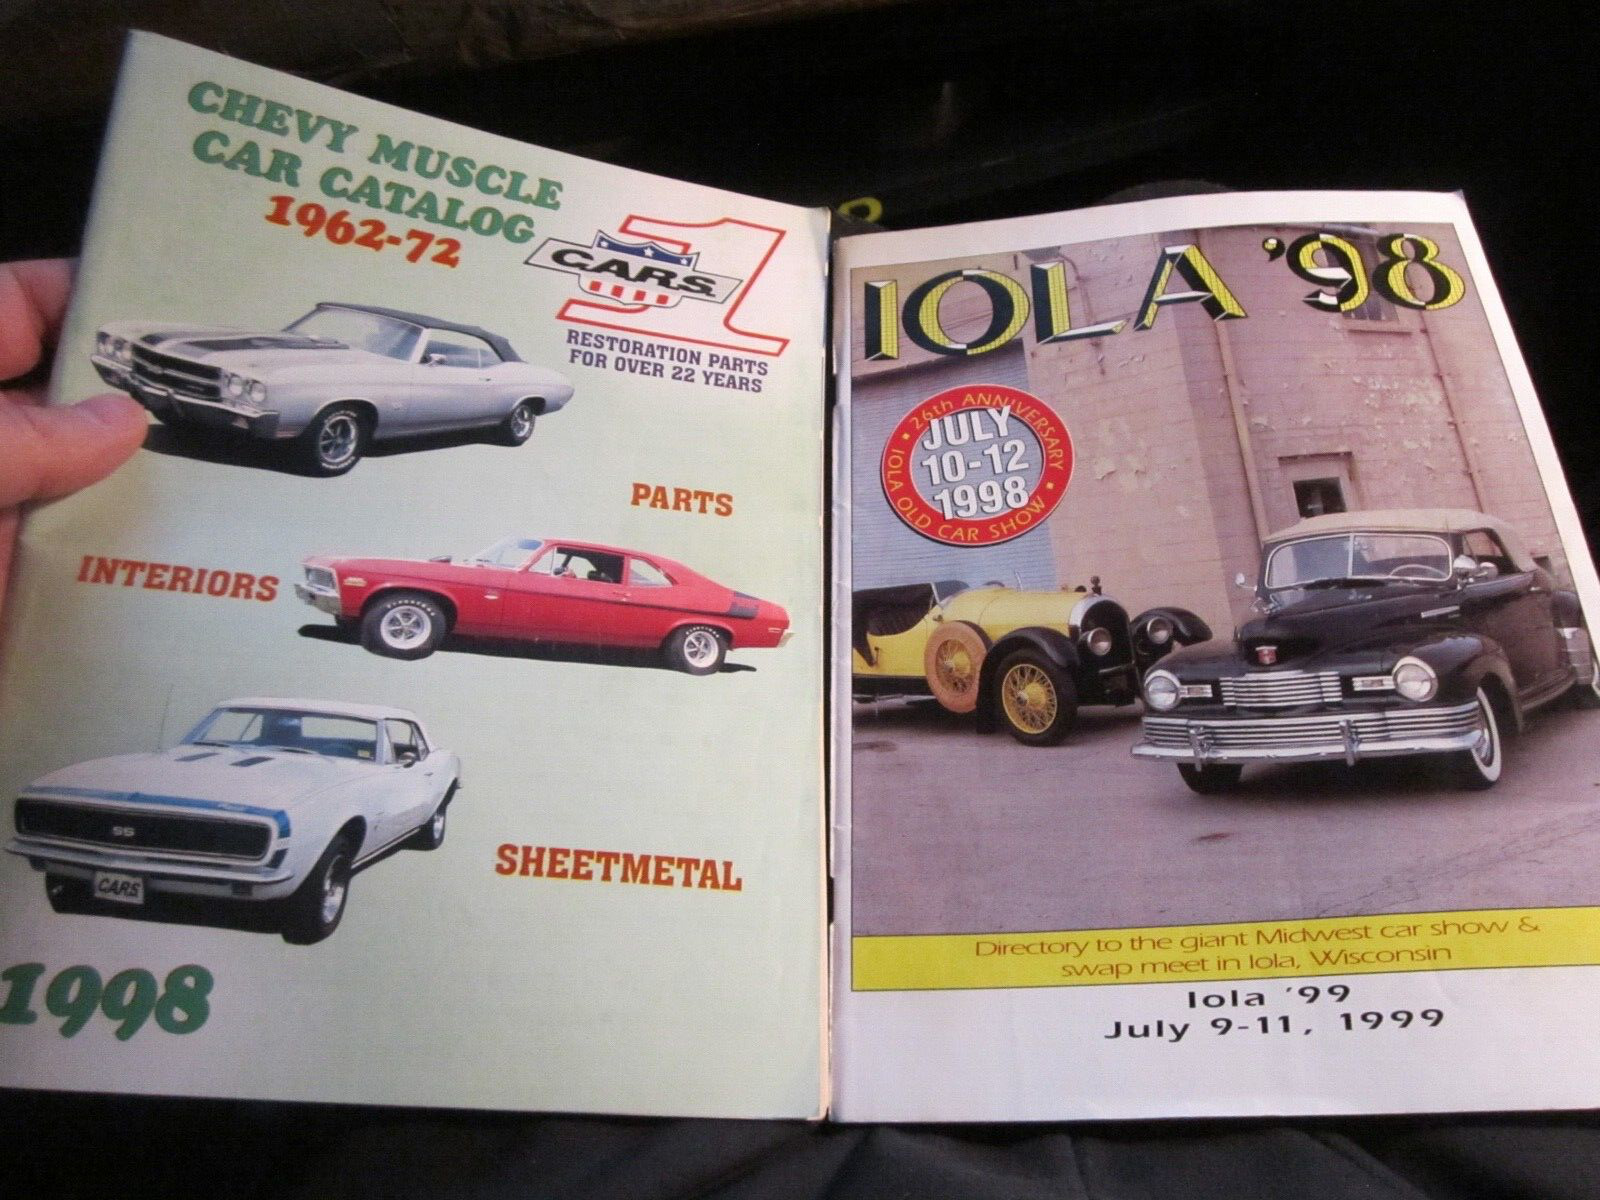 1998 CHEVY MUSCLE CAR CATALOG CARS 1 & 1998 ILOA OLD CAR SHOW MAGAZINE BBA42